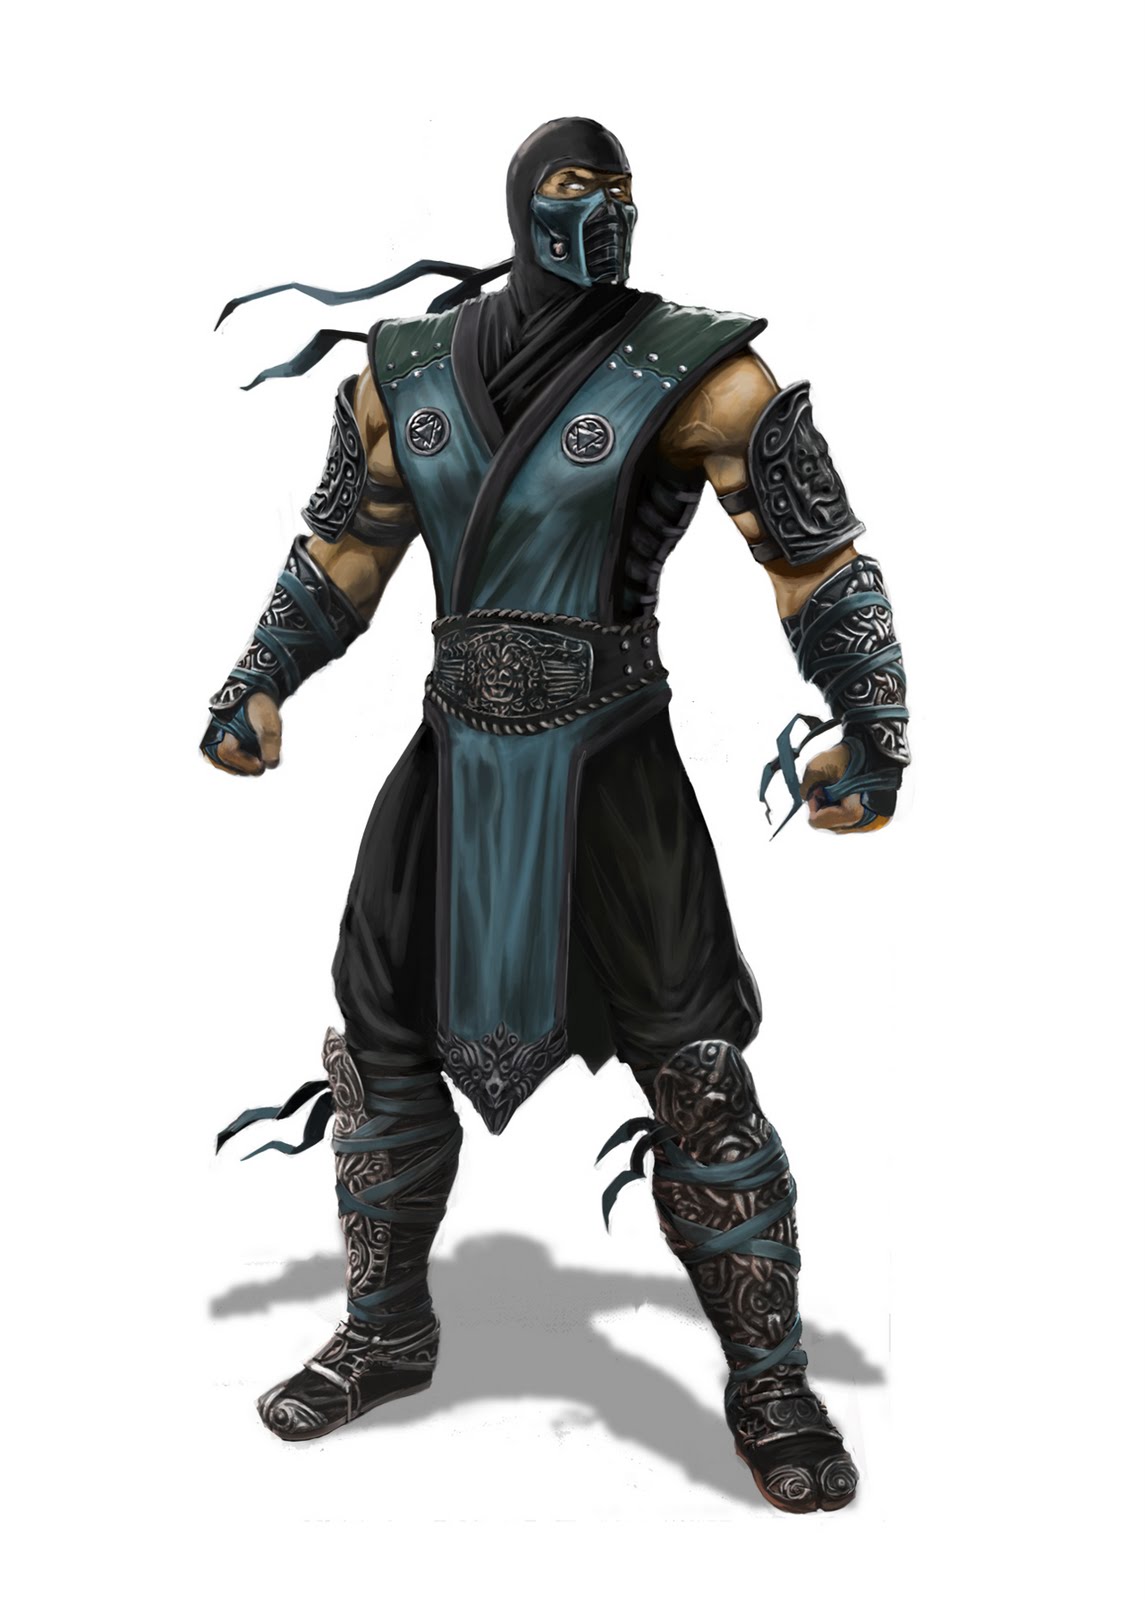 Mortal Kombat in Skyrim - Skyrim Mod Requests - The Nexus Forums